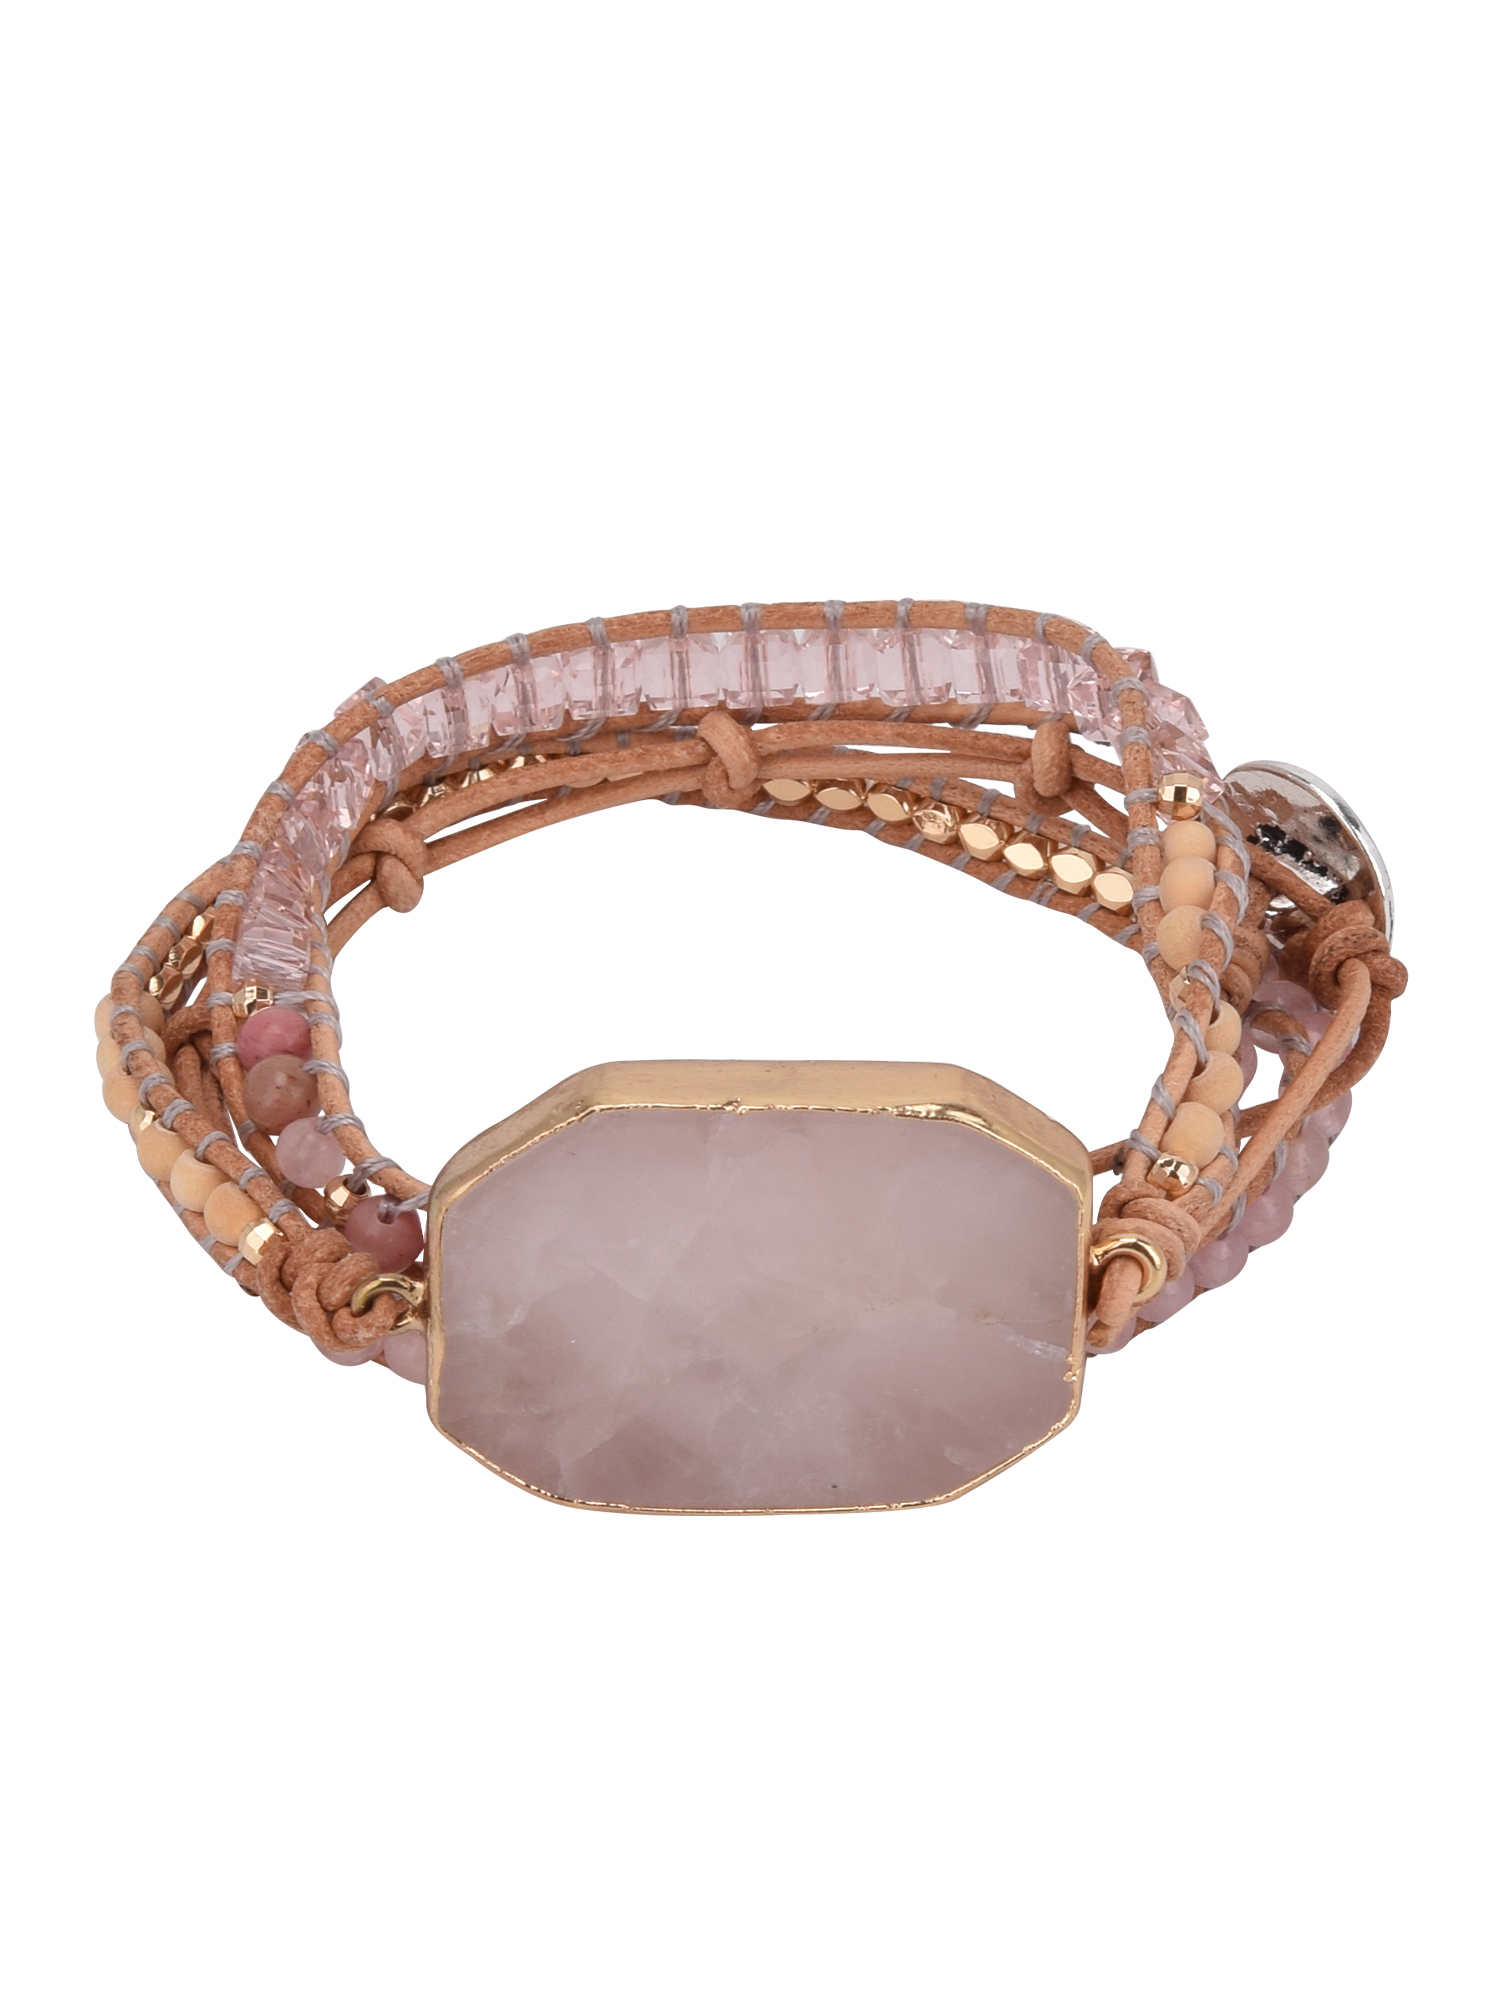 The Pioneer Woman - Women's Jewelry, Semi-Precious Stone Wrap Bracelet - image 1 of 5